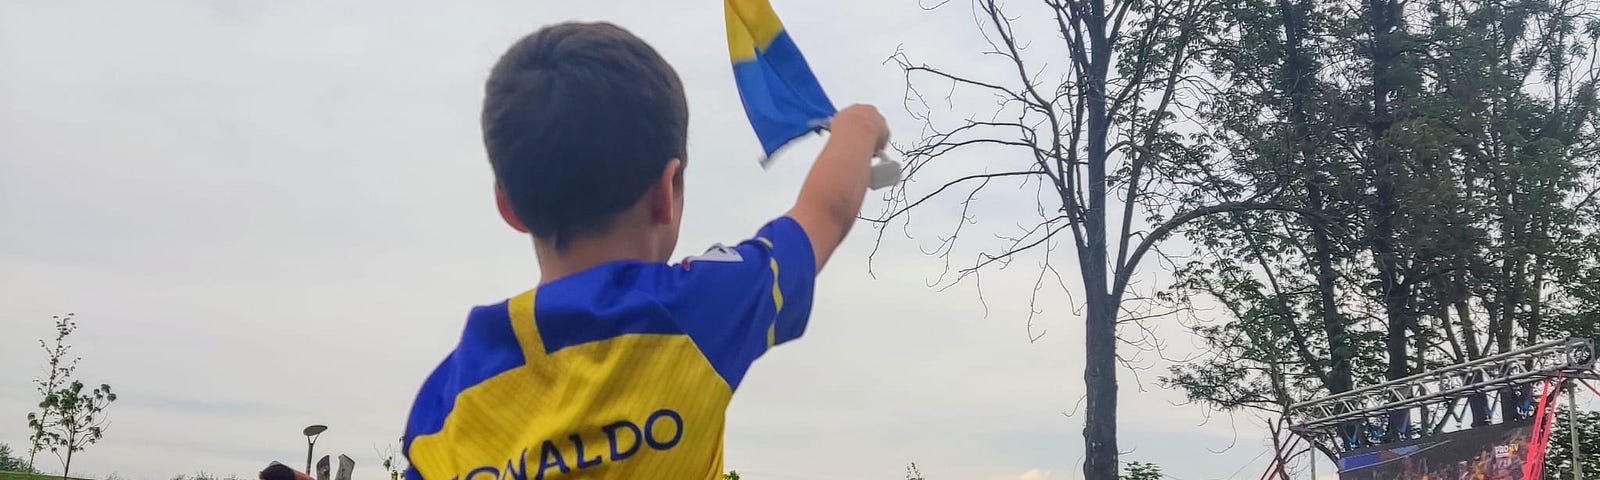 boy waving flag as soccer game plays